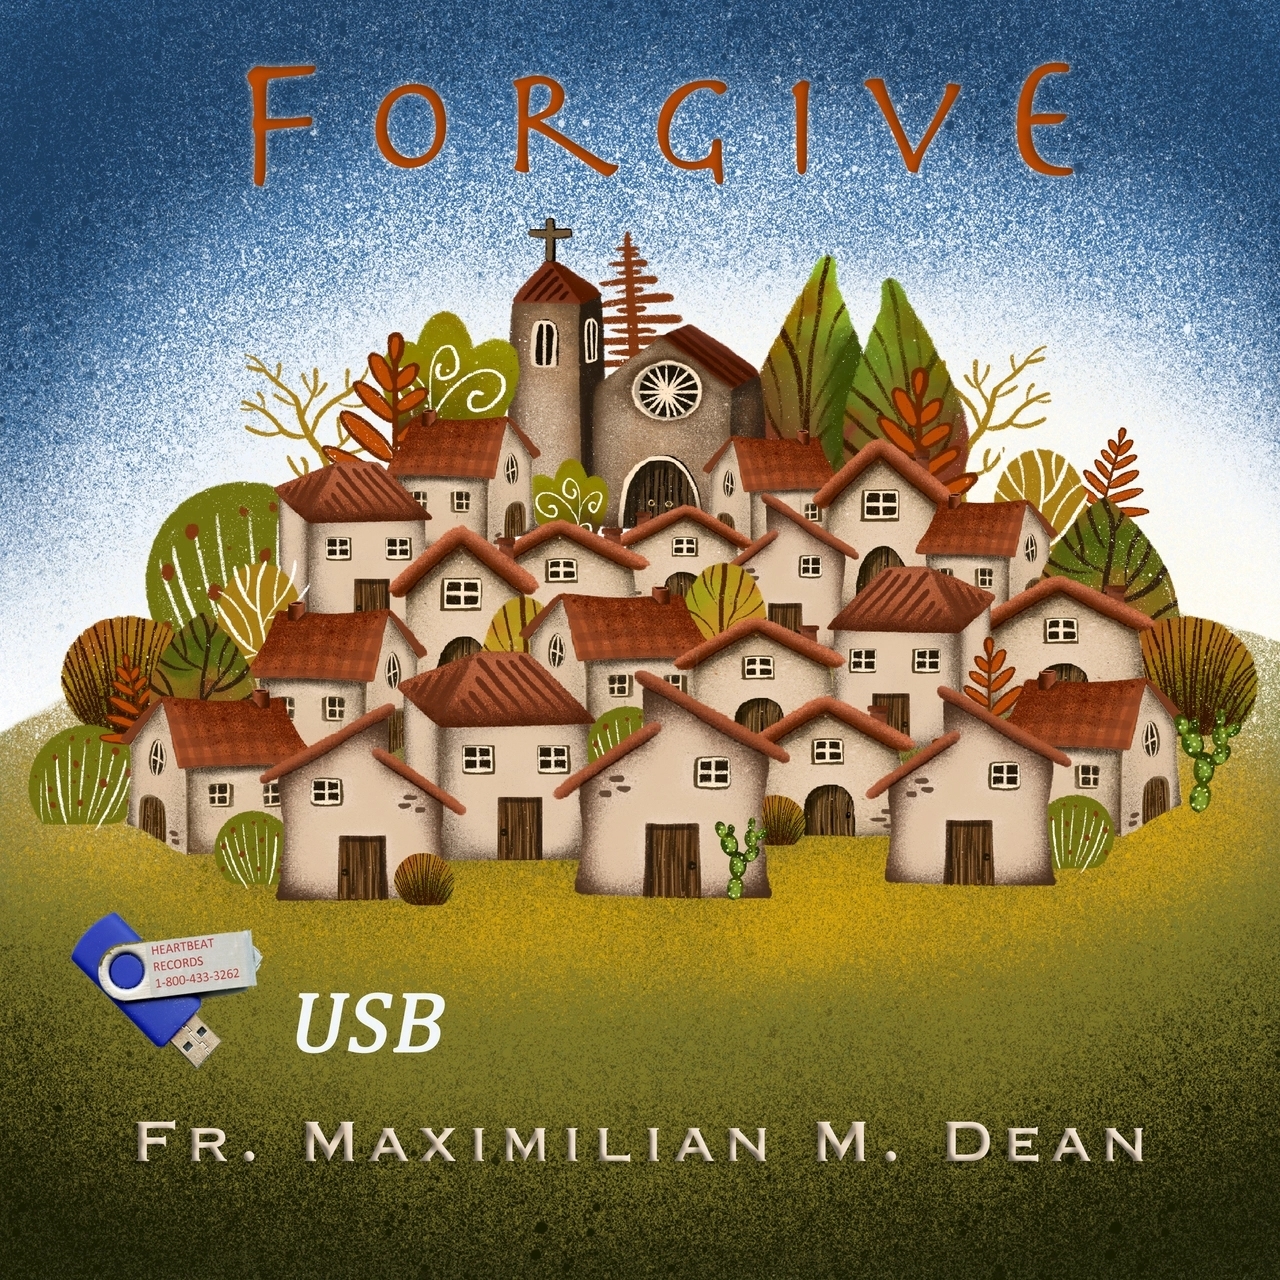 Forgive by fr. maximilian mary dean usb